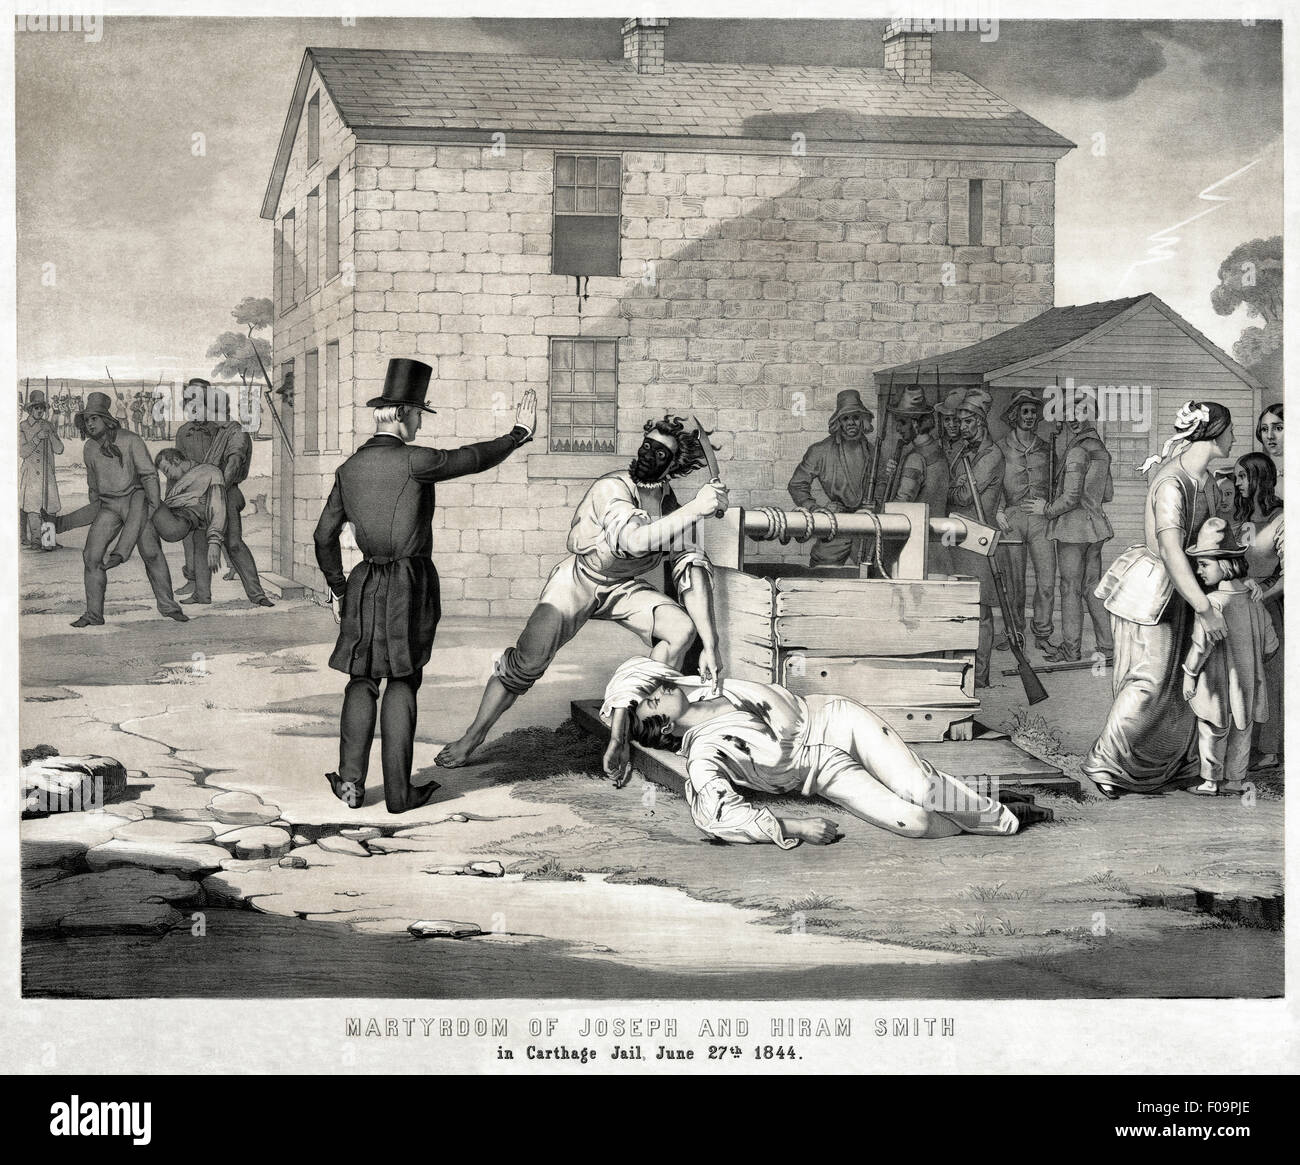 Martyrdom of Joseph and Hiram Smith in Carthage Jail, June 27, 1844 Stock Photo